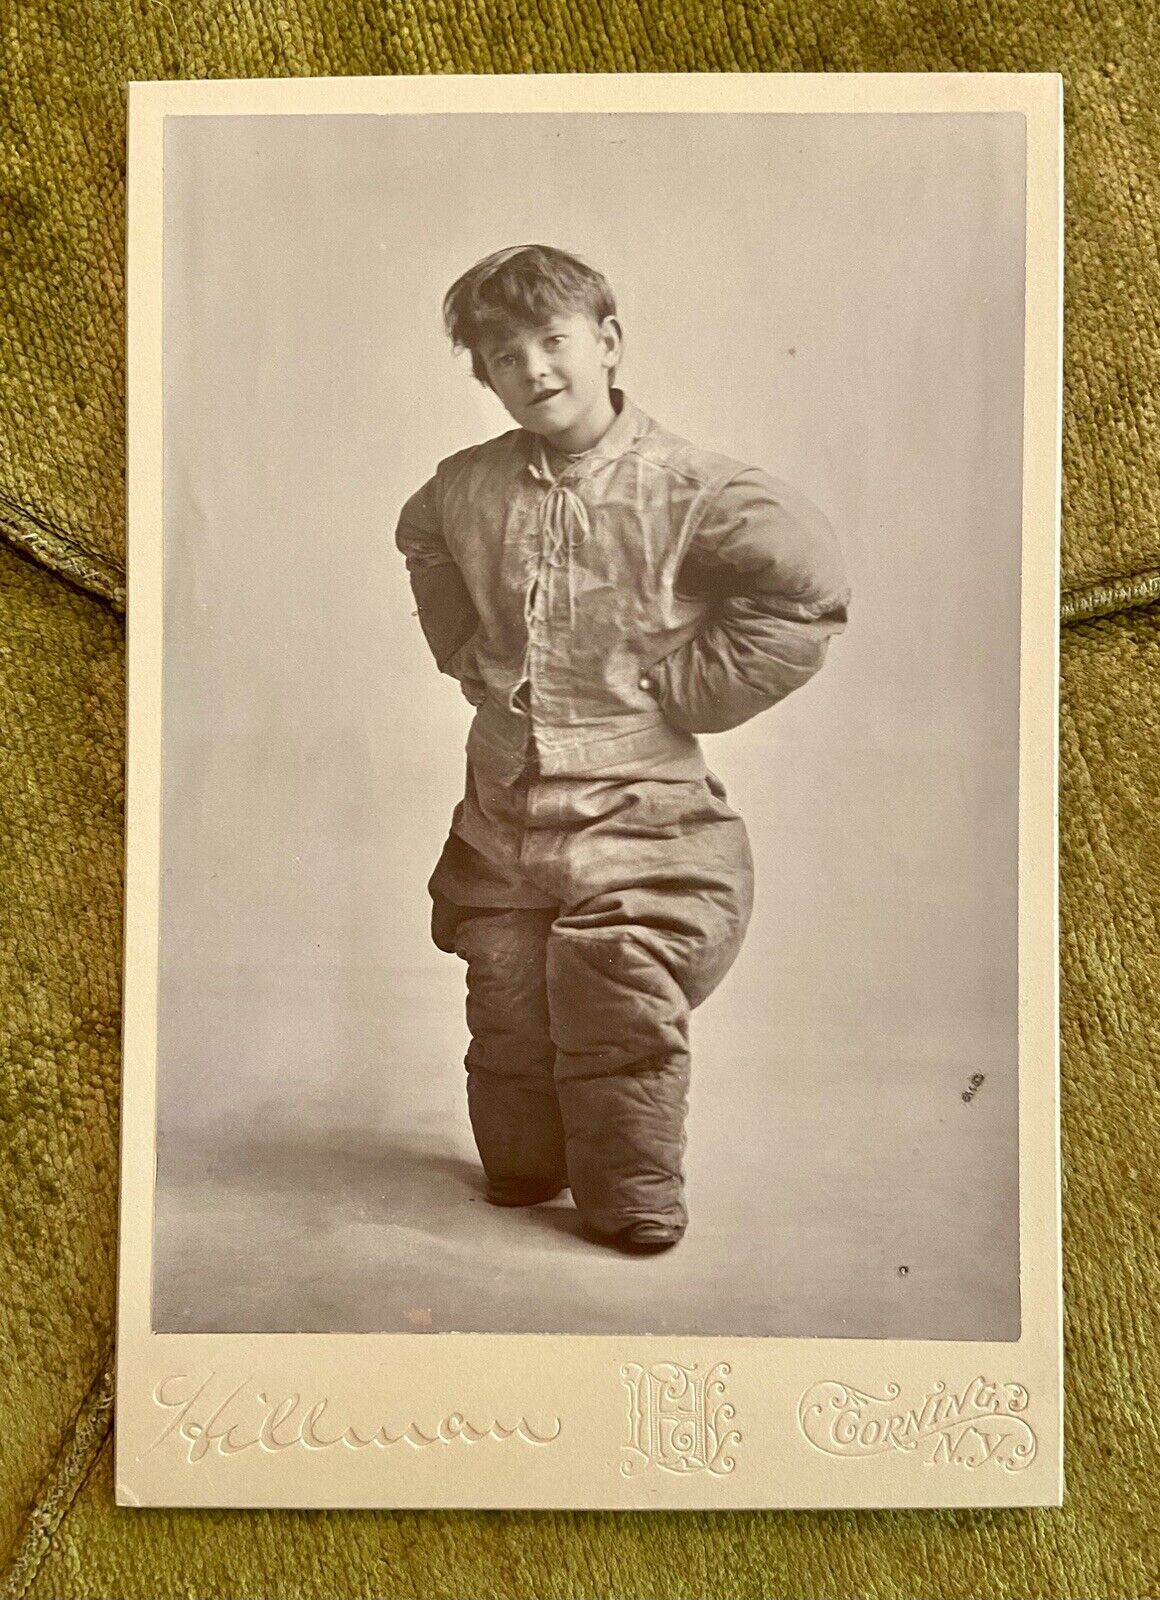 ODD Antique Cabinet Card Photo FOOTBALL Uniform Too Big Little Boy Corning NY